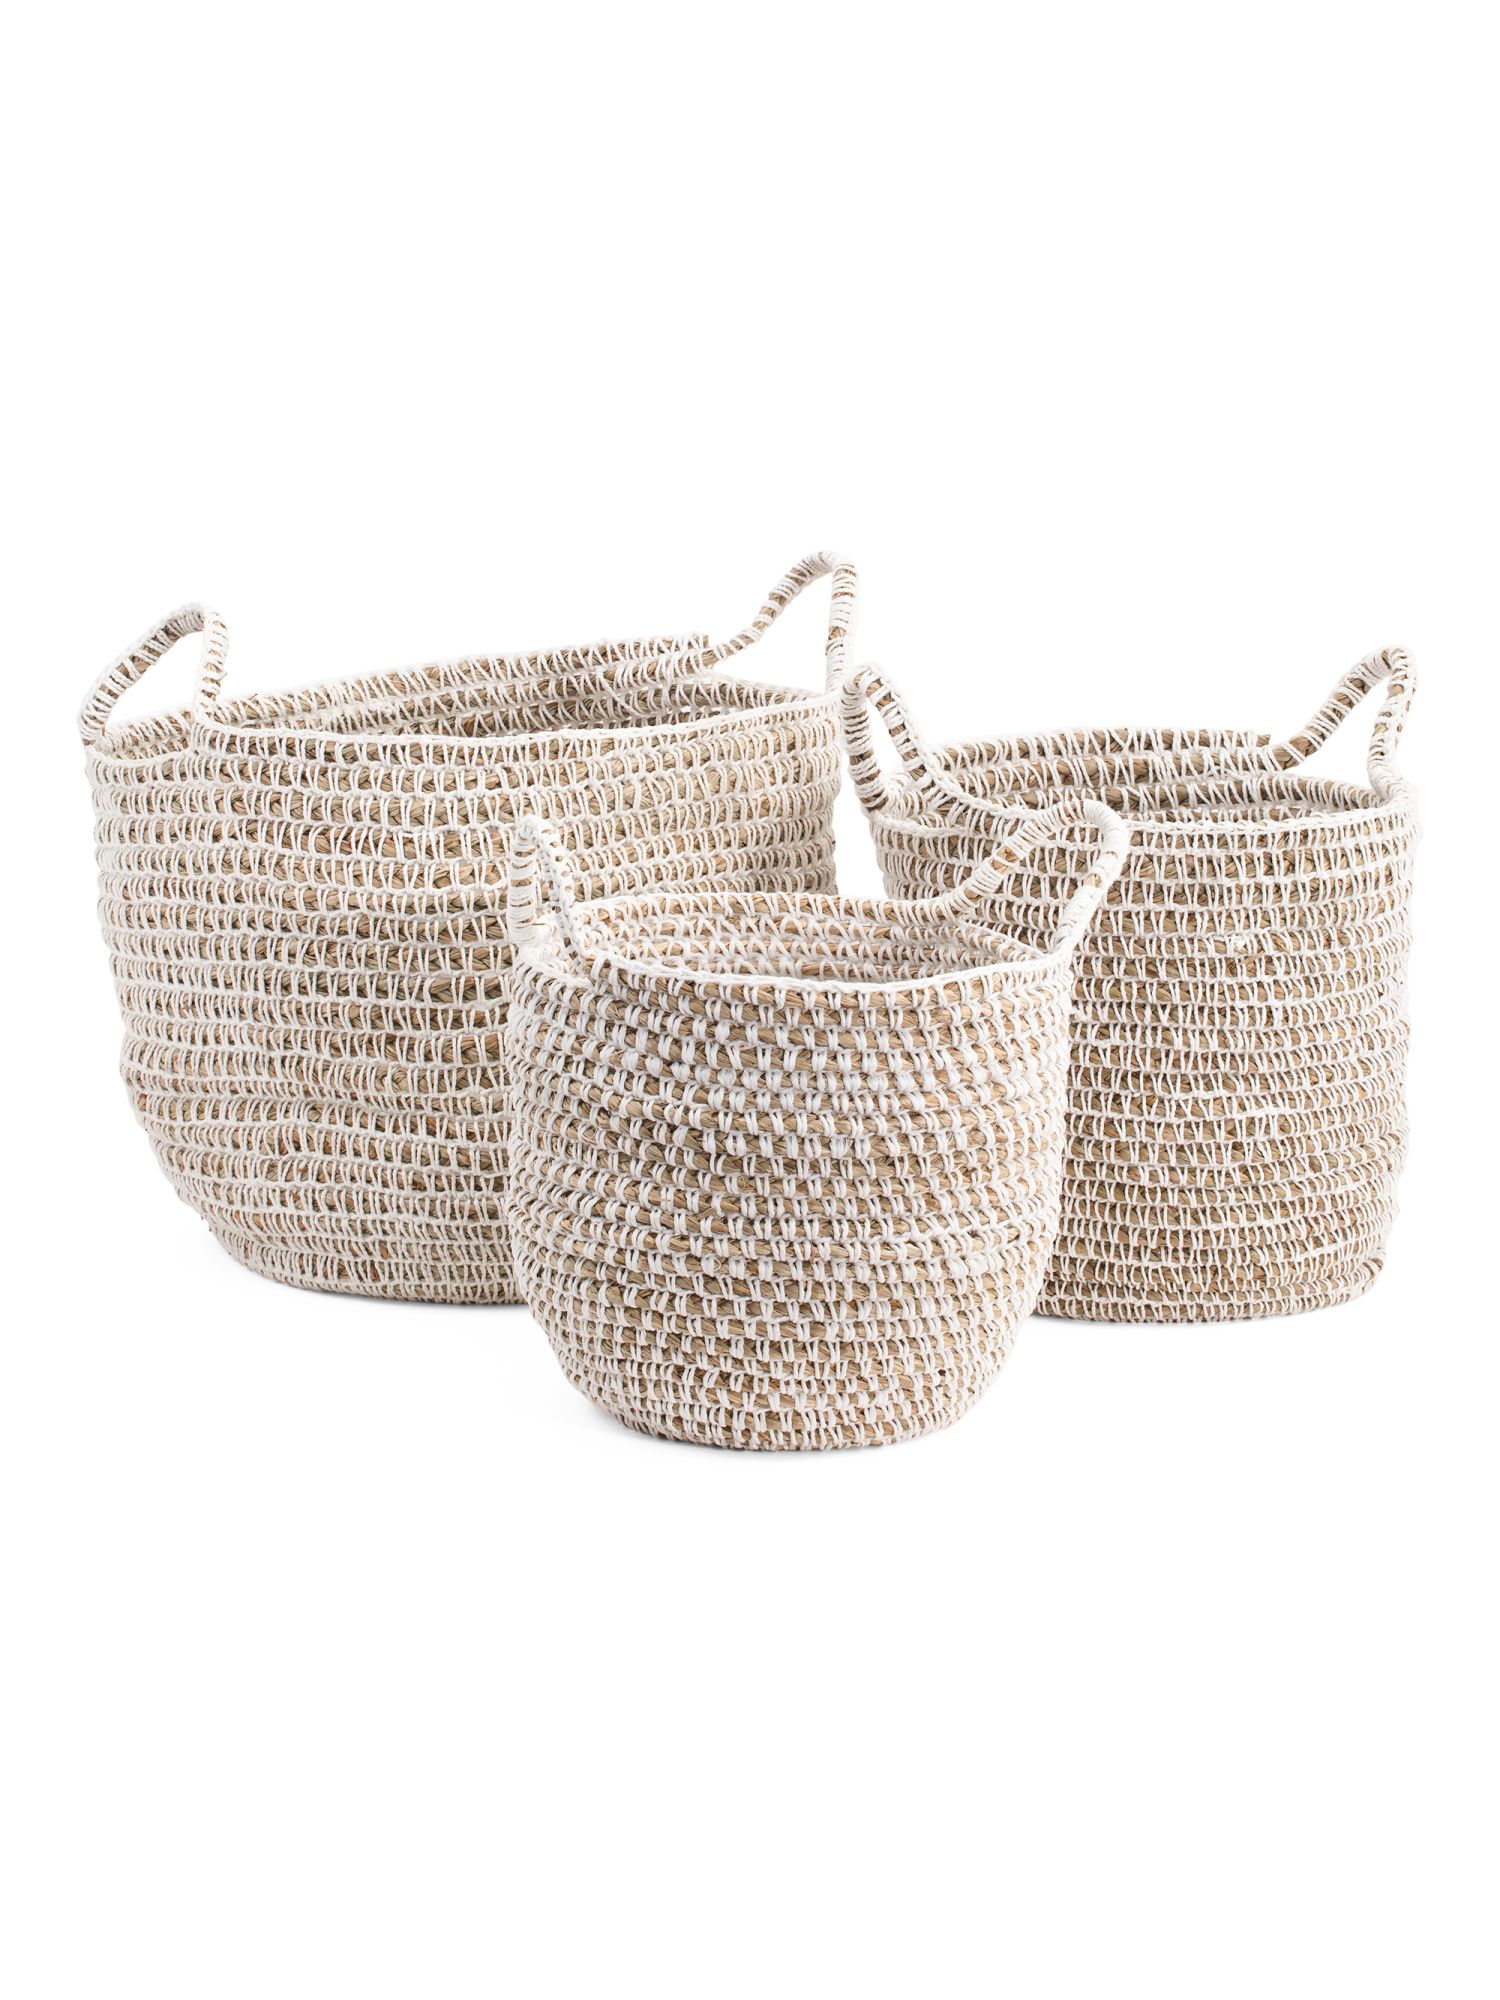 Mendong Crochet Weave Basket Collection | TJ Maxx